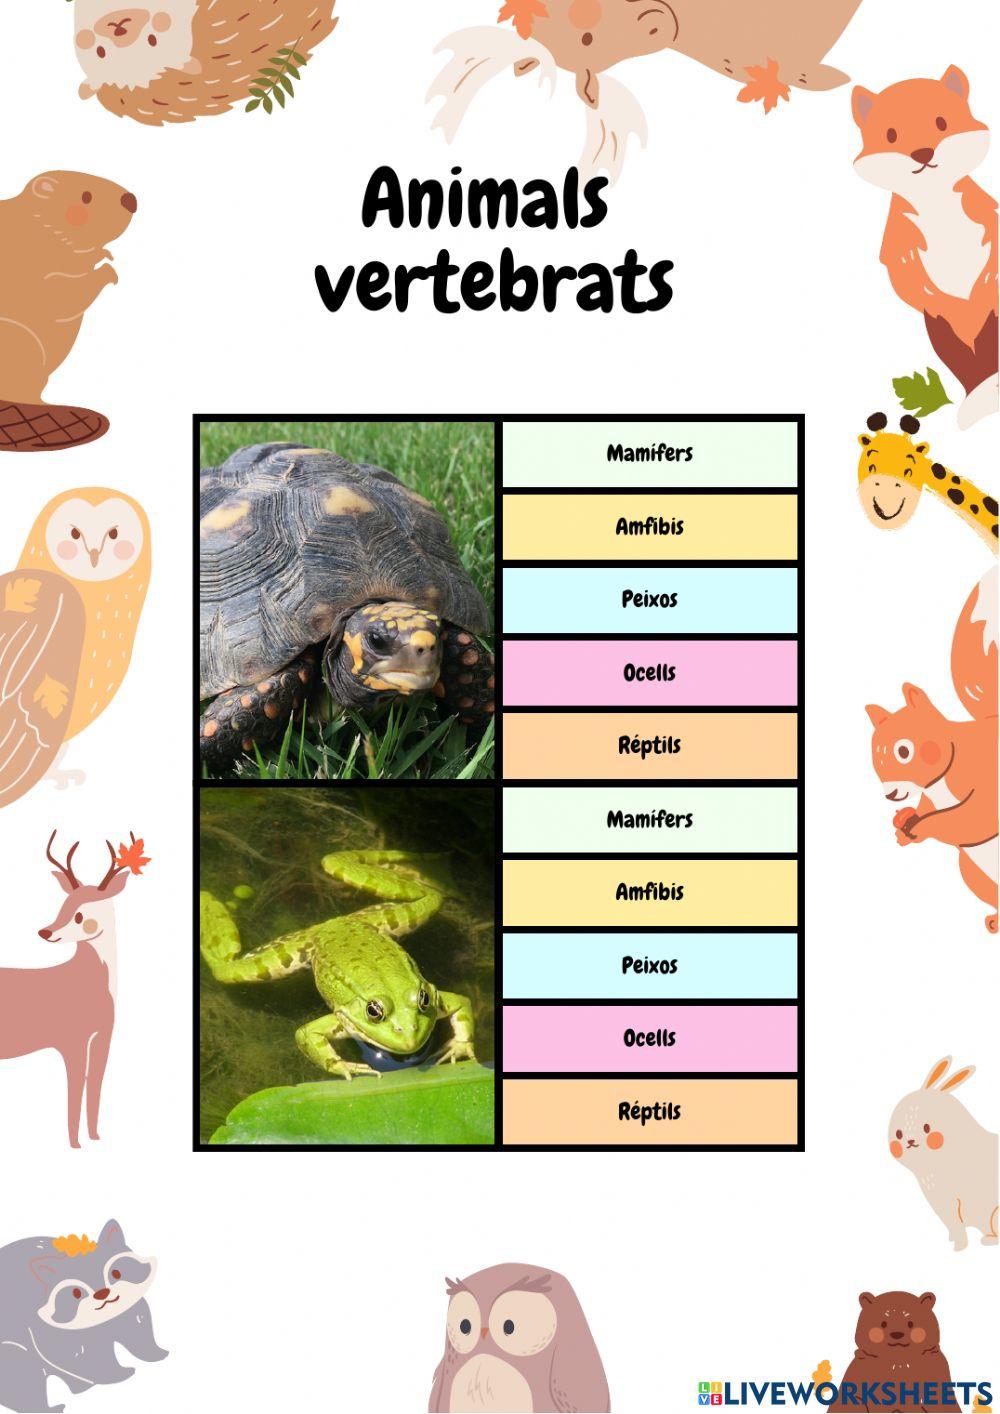 Animals vertebrats